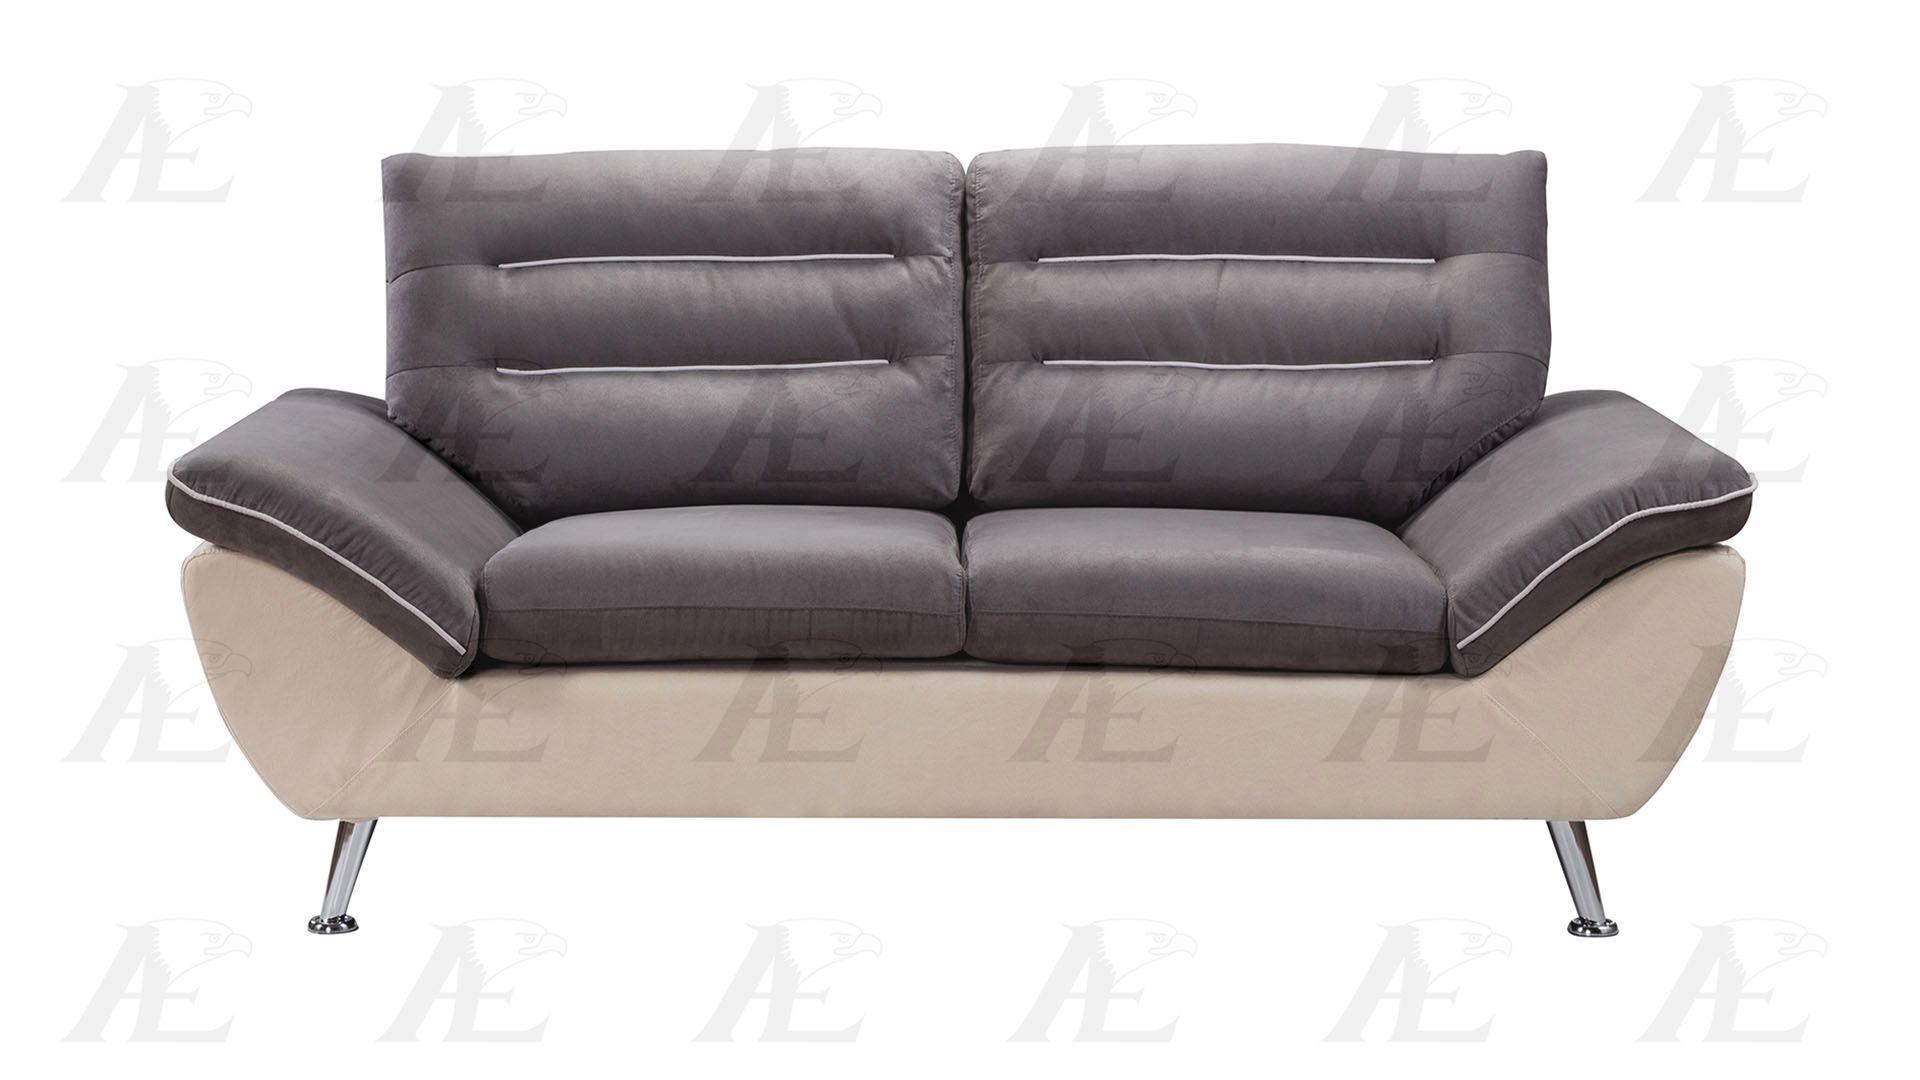 

    
American Eagle AE-2365 Modern Gray and Yellow Sofa Set 3pcs
